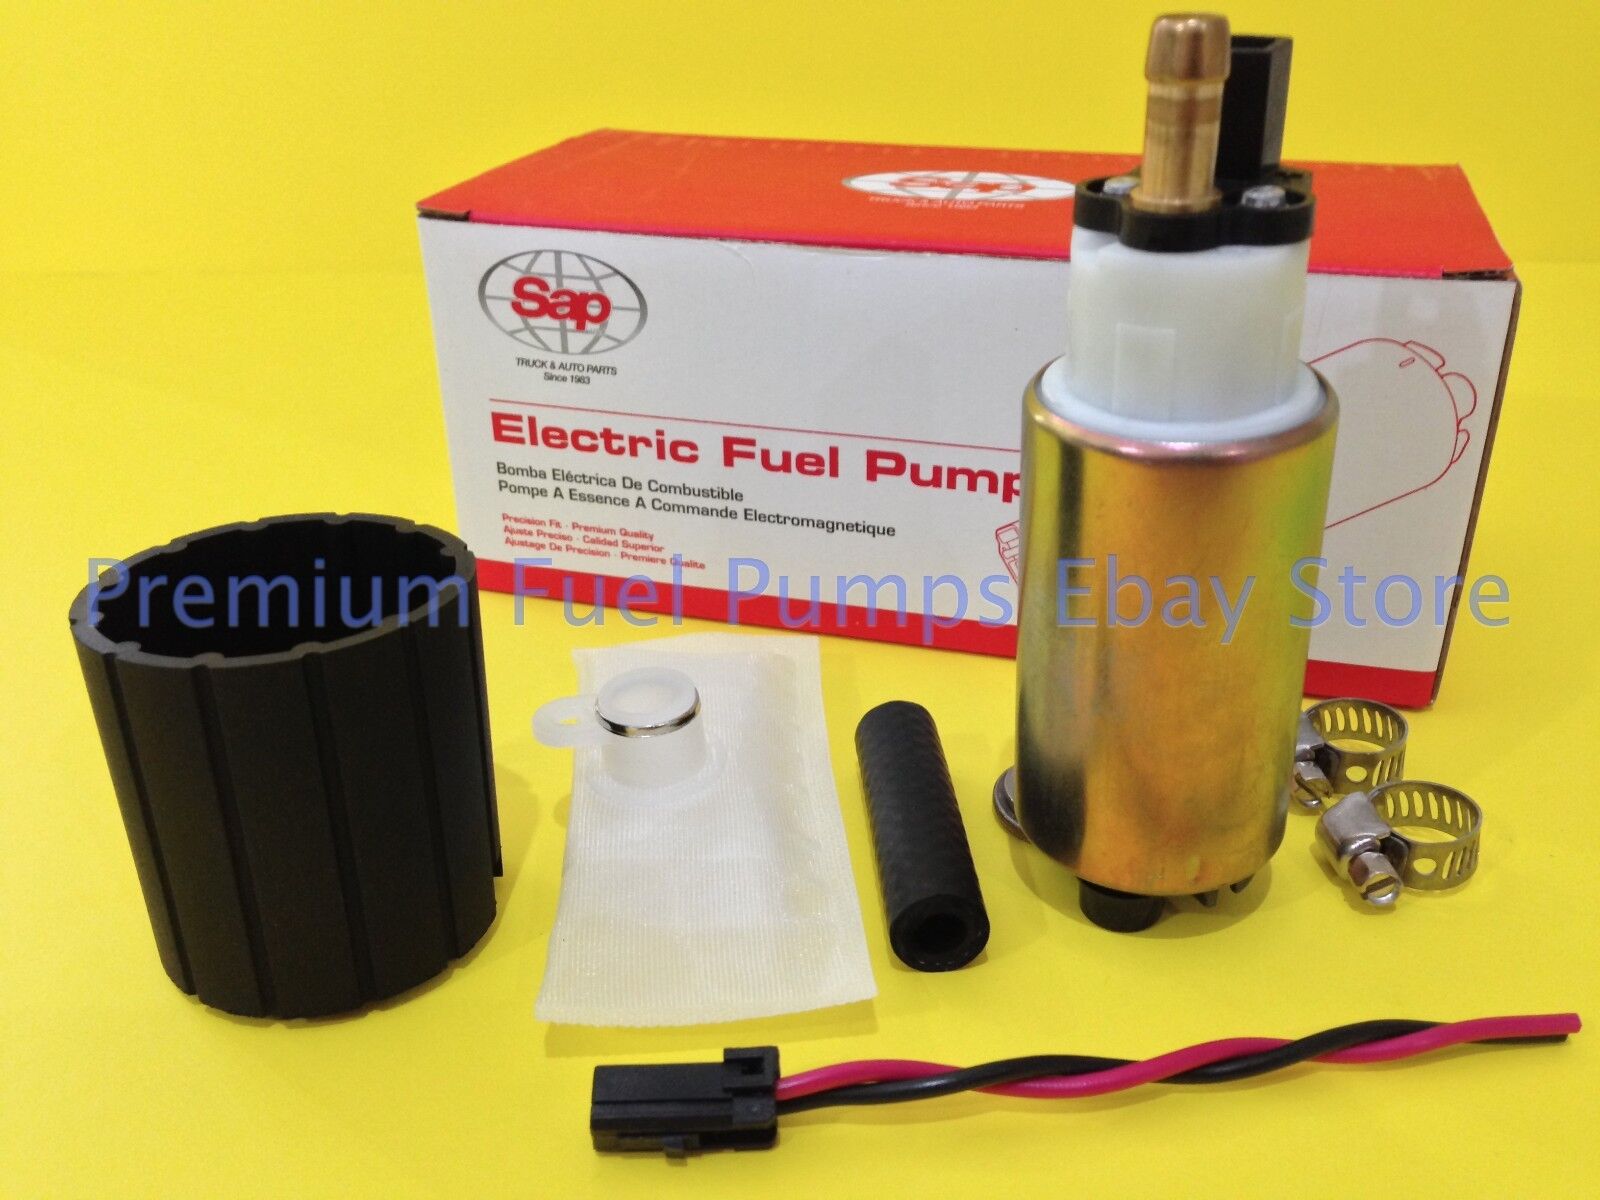 NEW PREMIUM QUALITY Fuel Pump - Lifetime Warranty